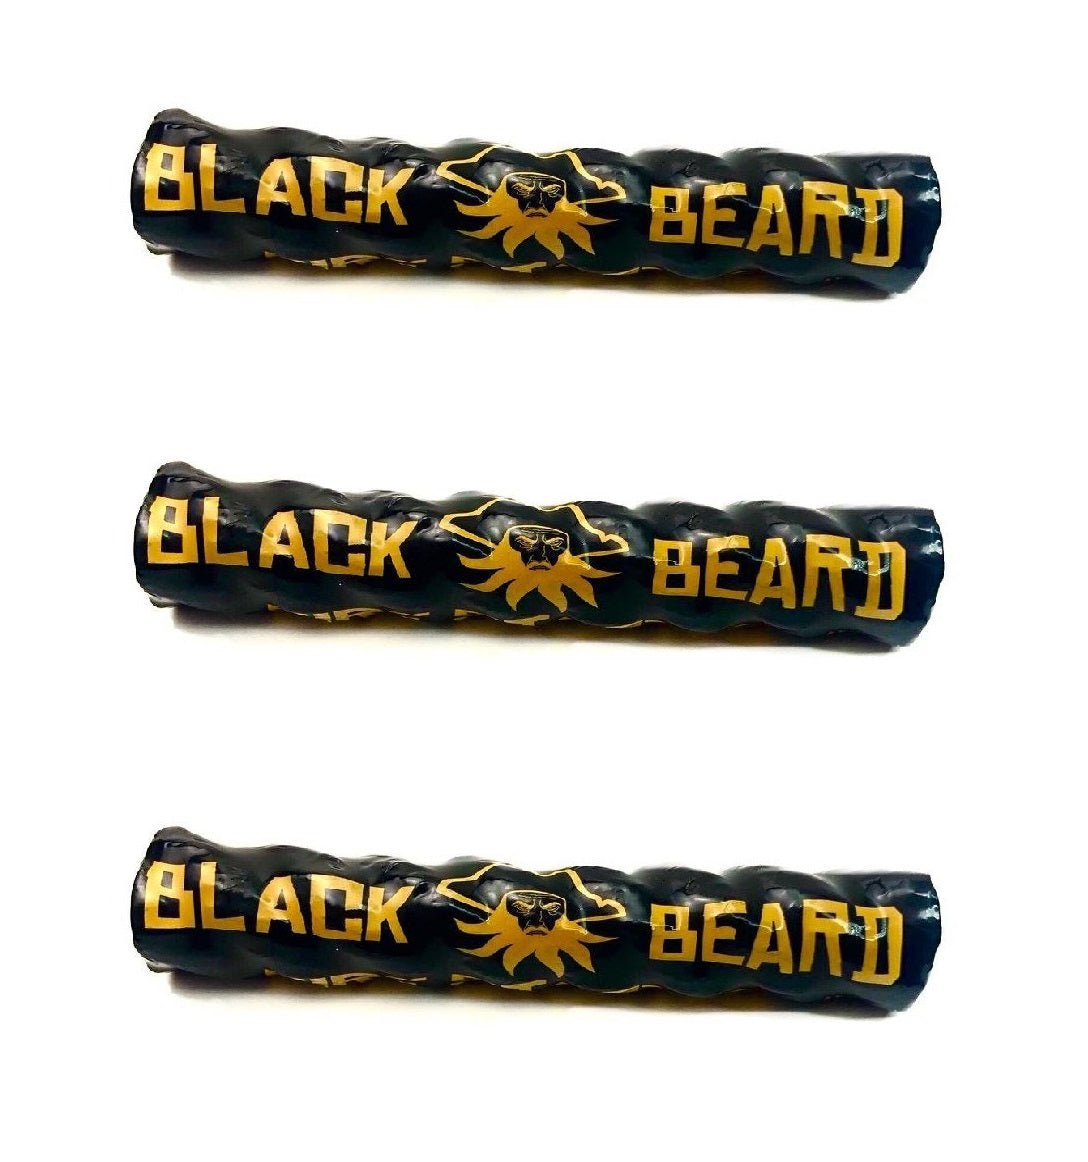 Black Beard Fire Starter Pack- Made in USA